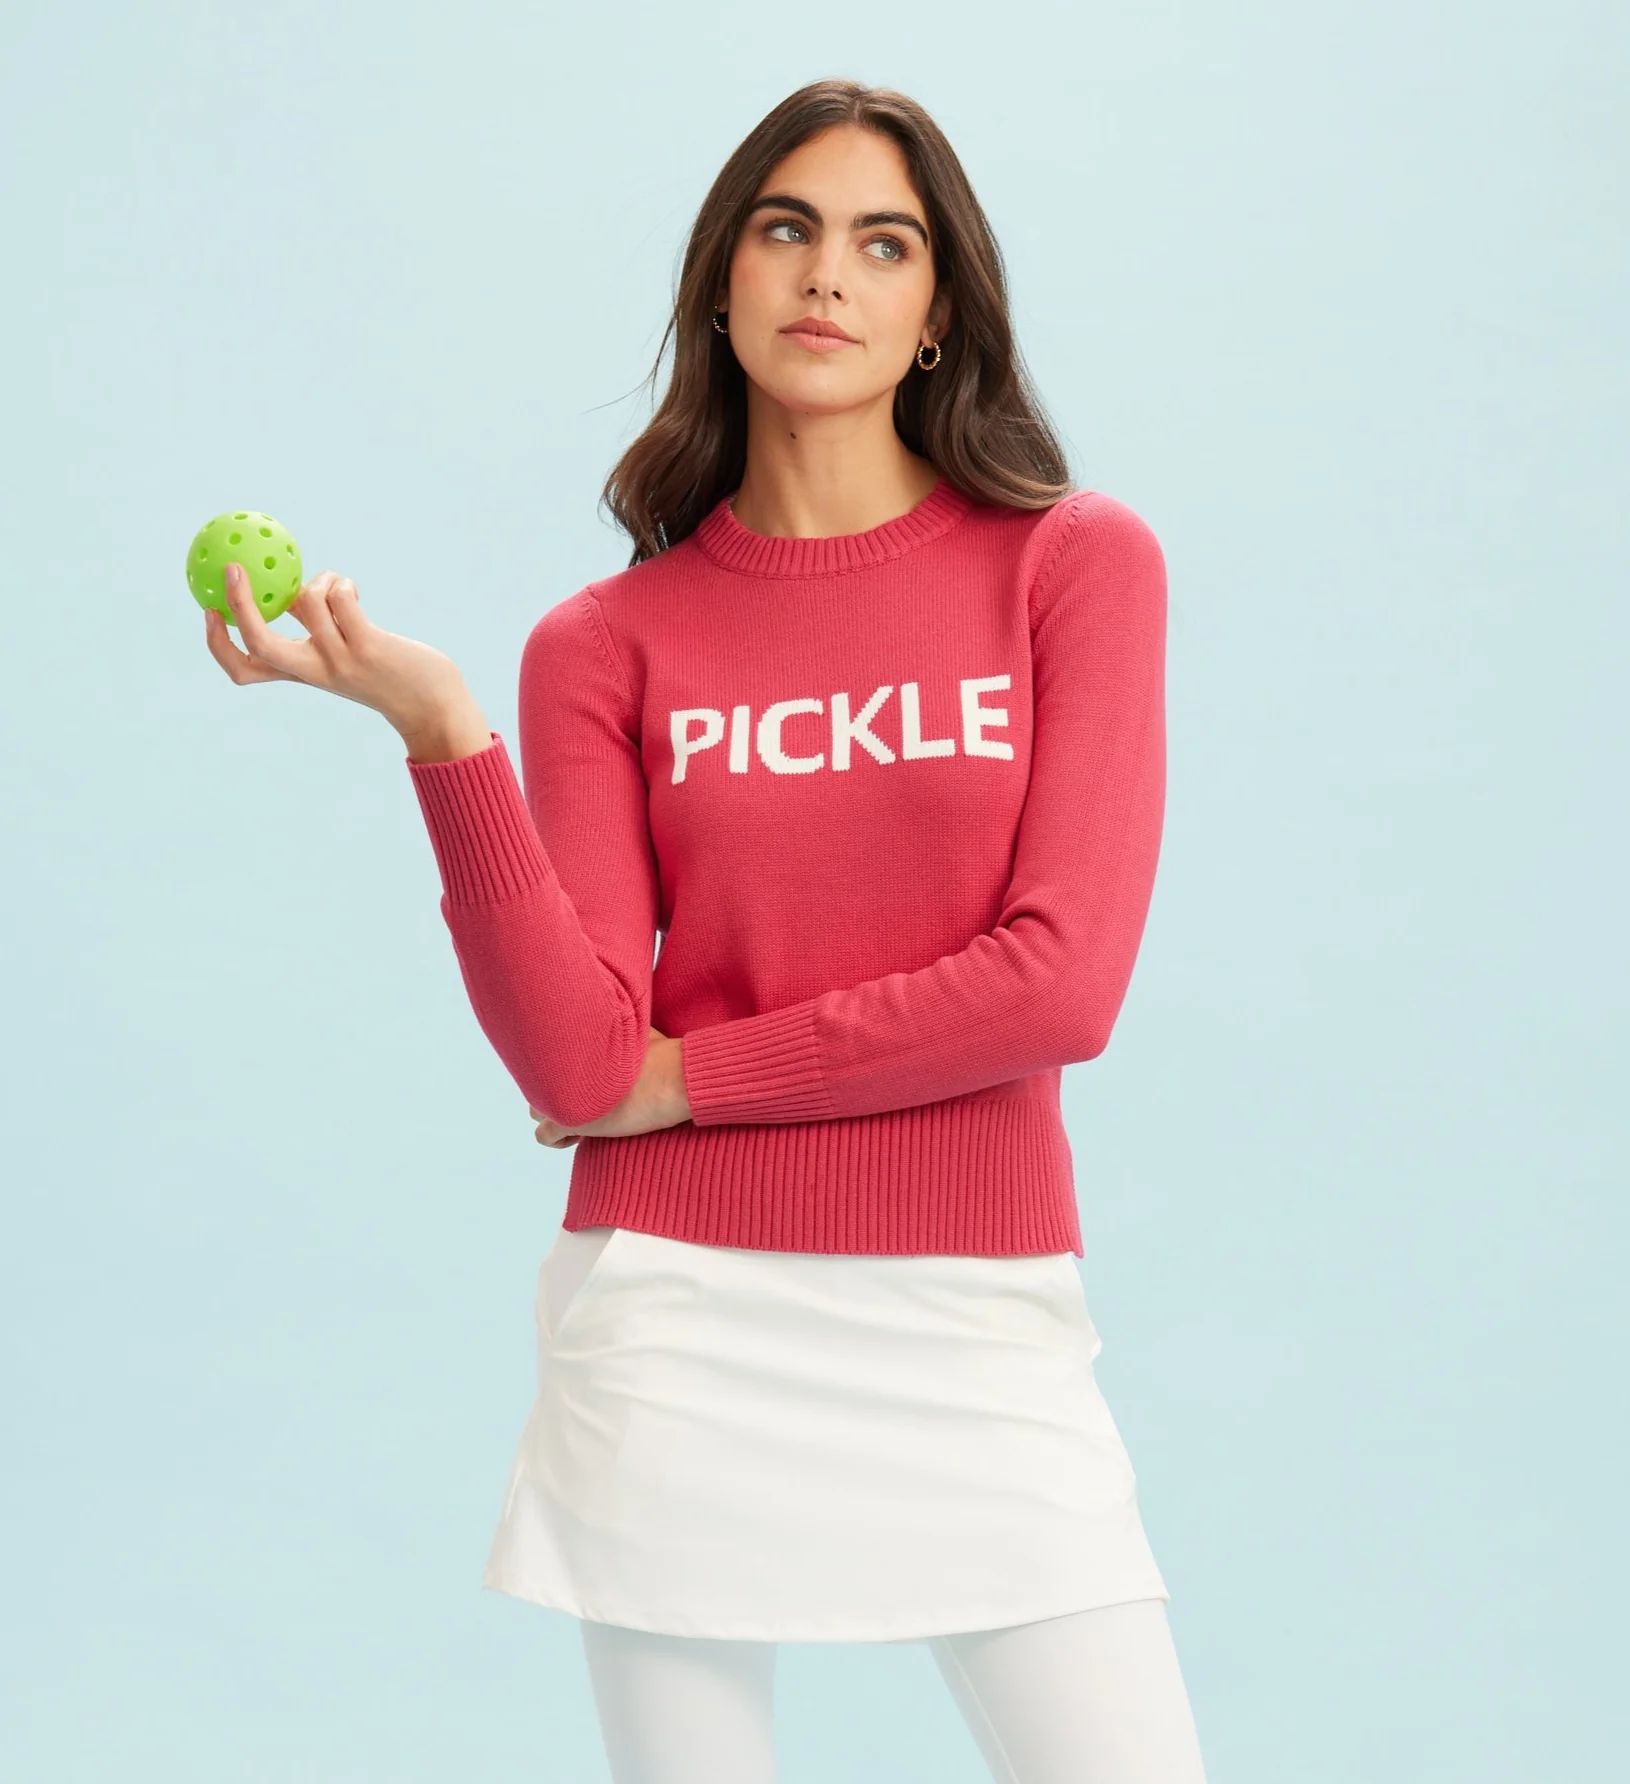 Renwick Pickle Sweater | Renwick Golf